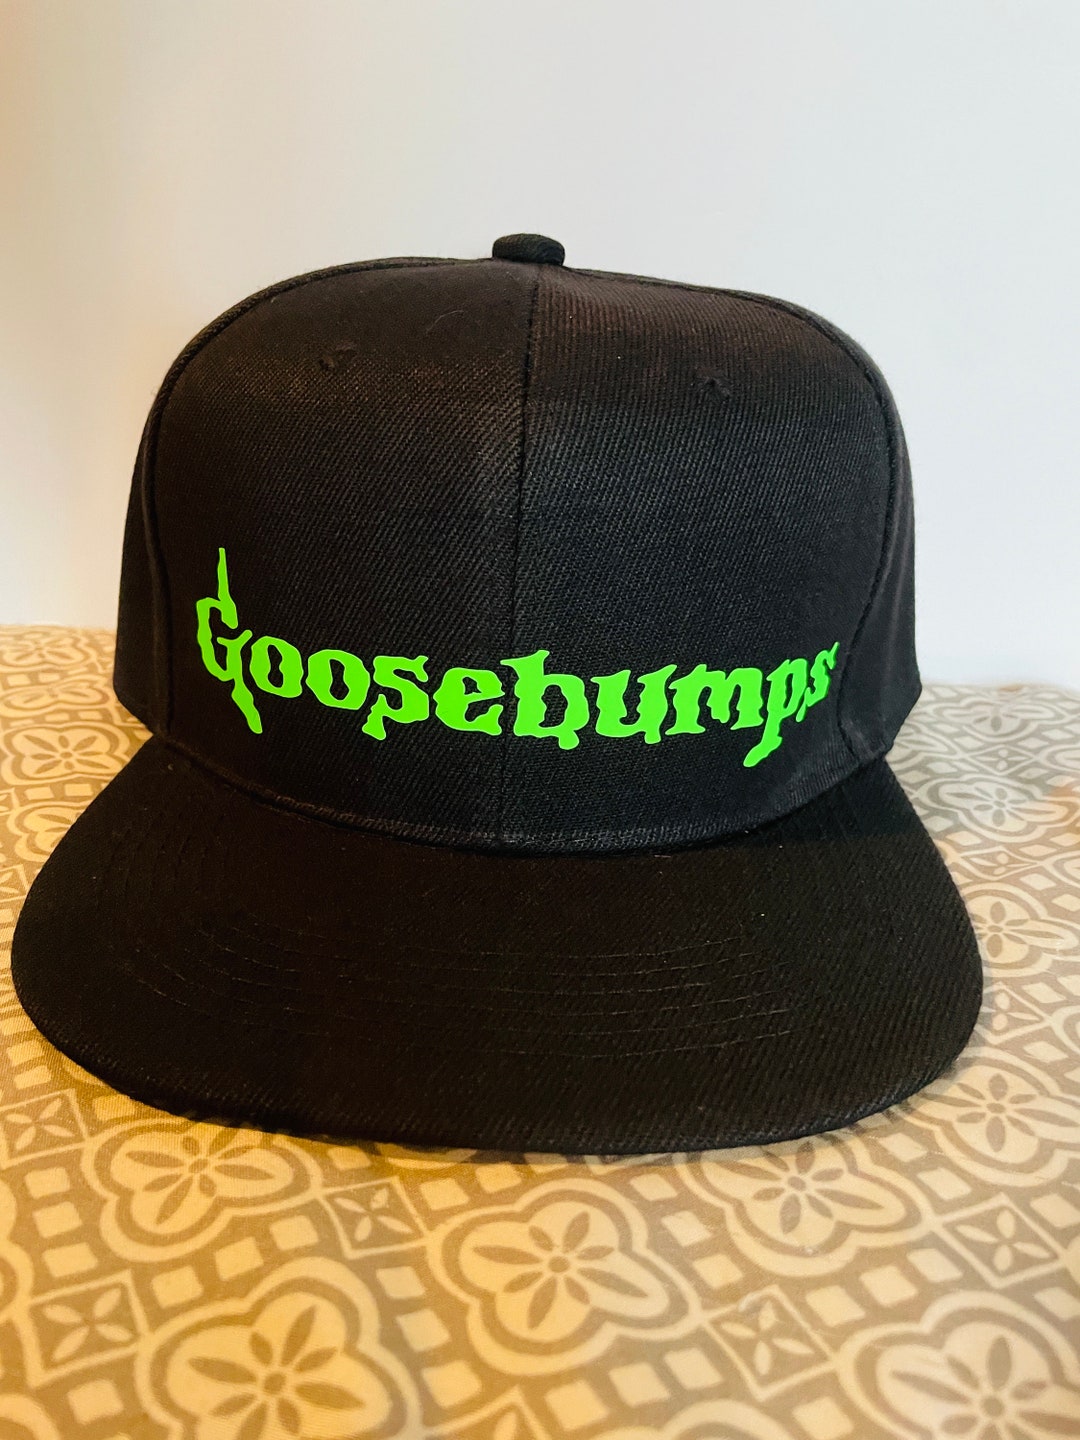 Goosebumps Logo Snapback Hat Black Baseball Cap - Etsy